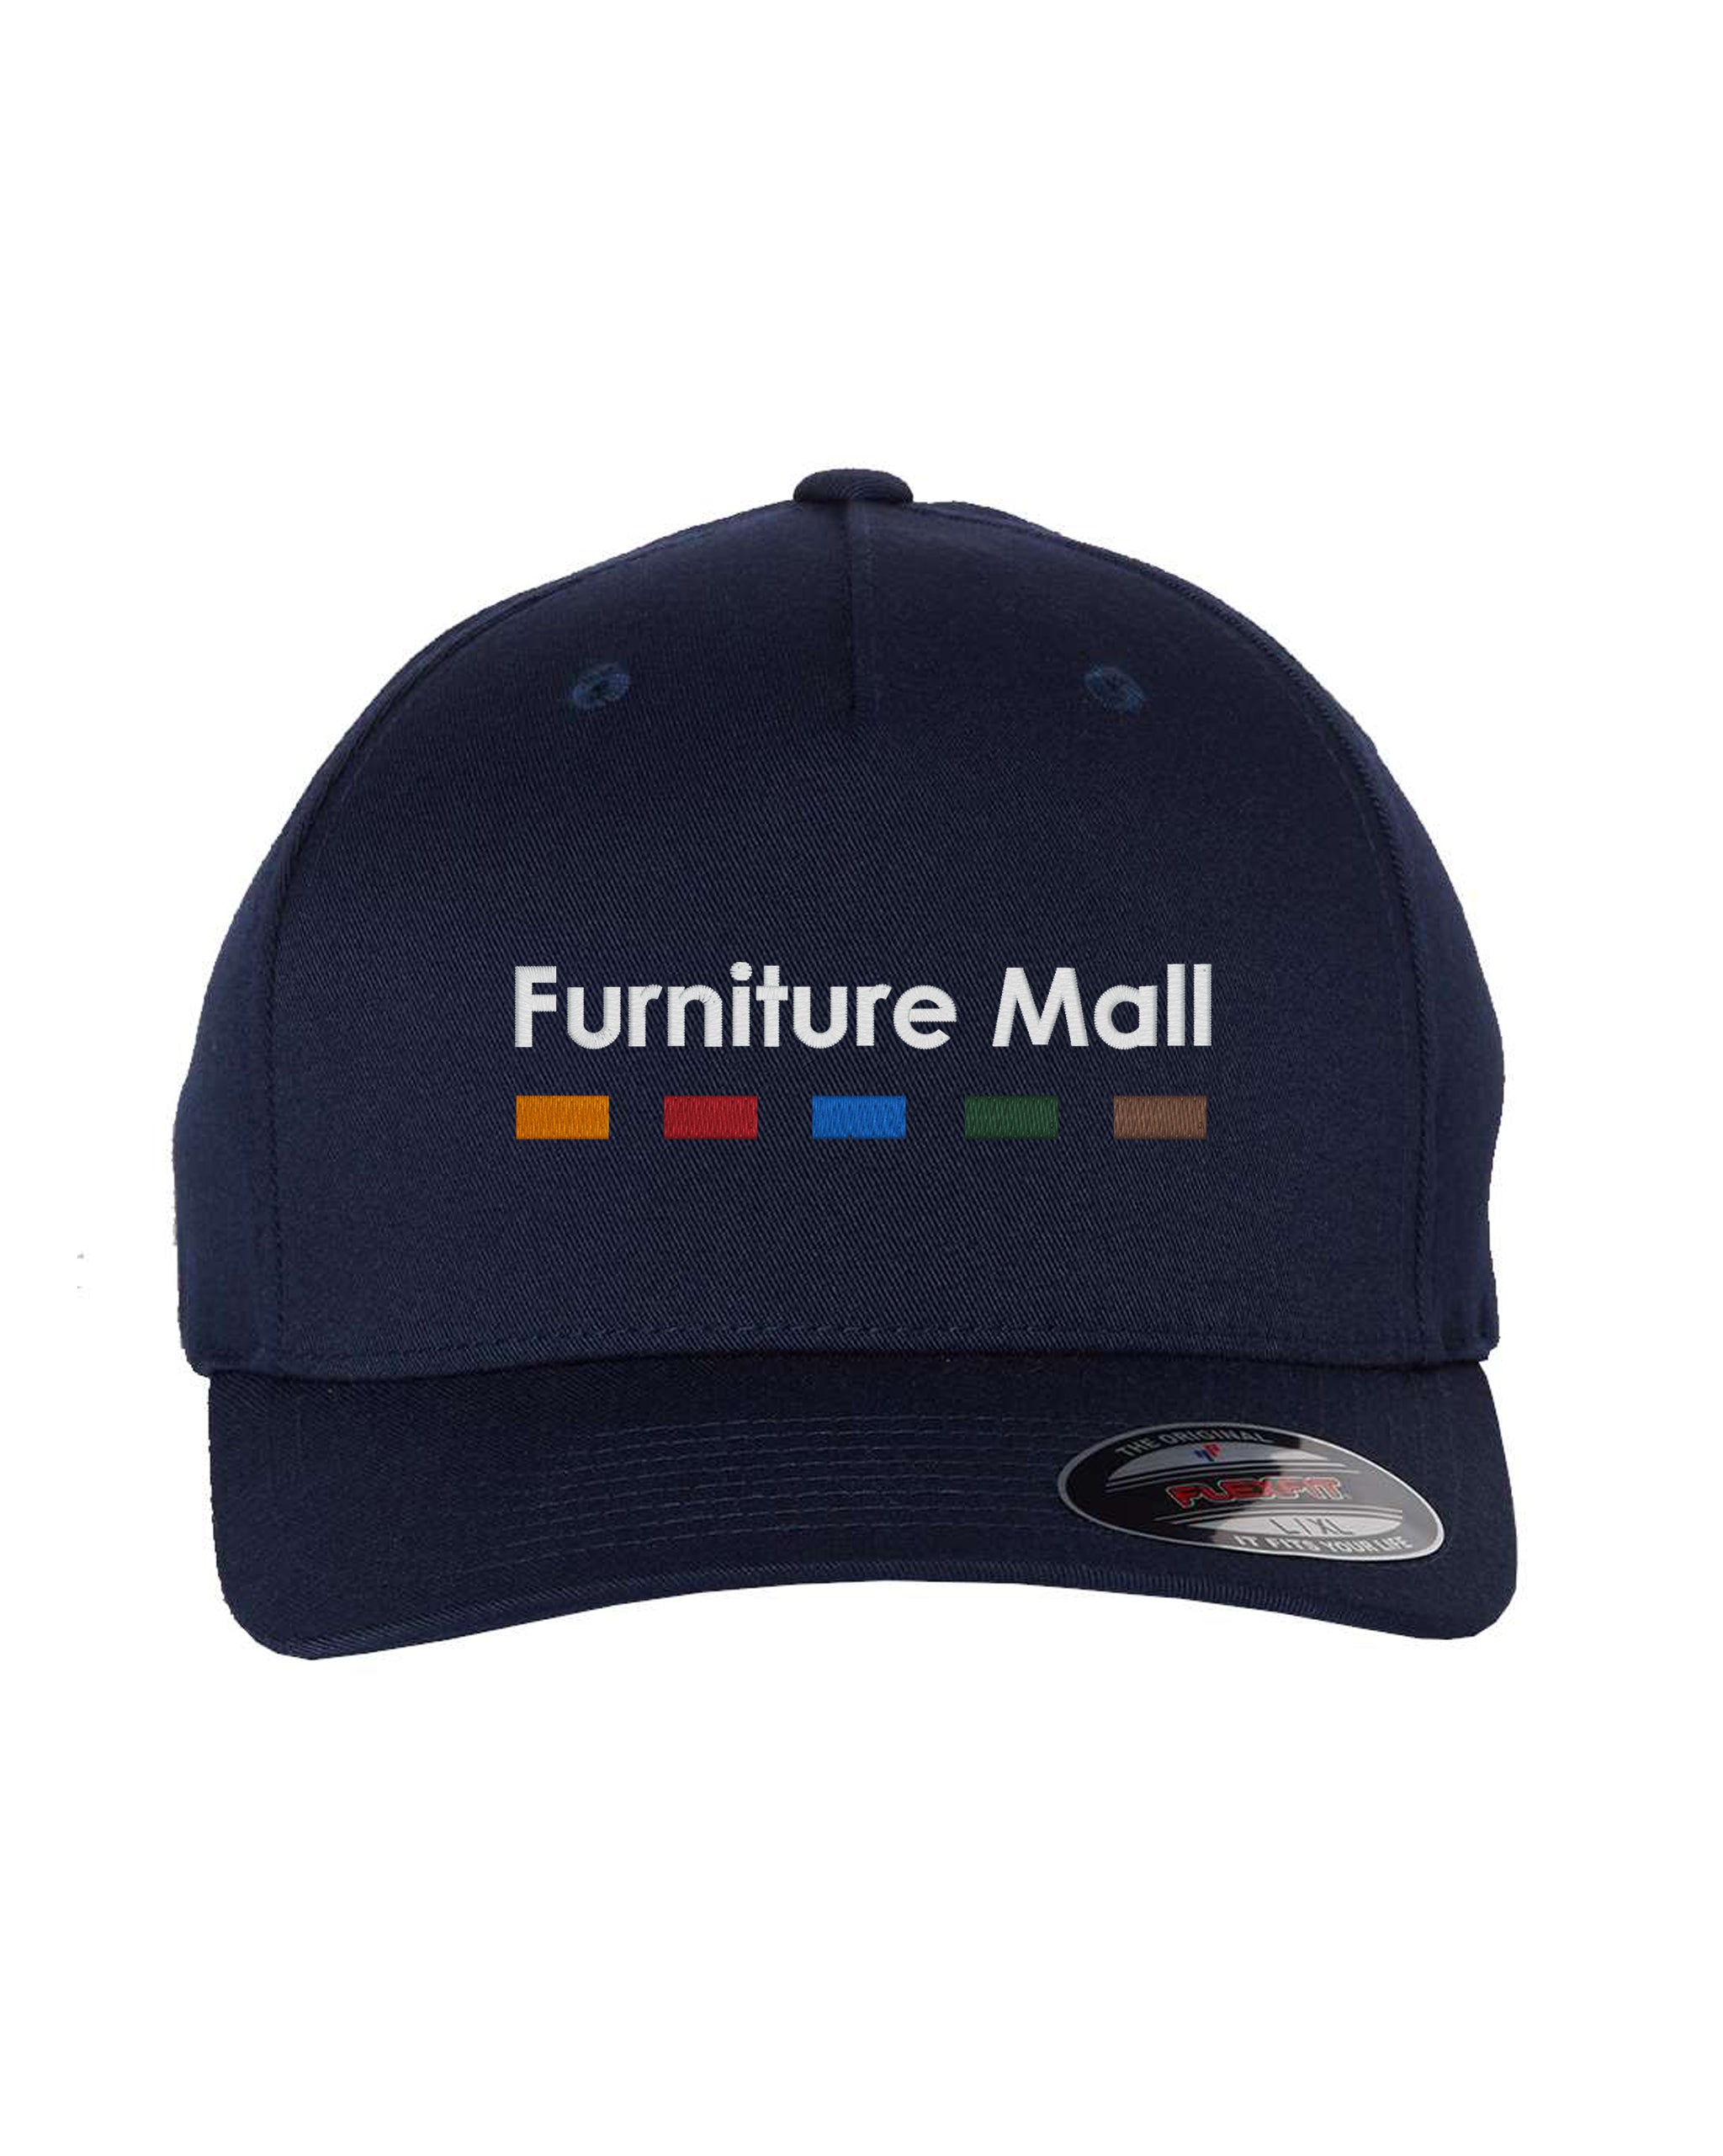 Furniture Mall - Flexfit Adult 5-Panel Poly-Twill Cap - 6560